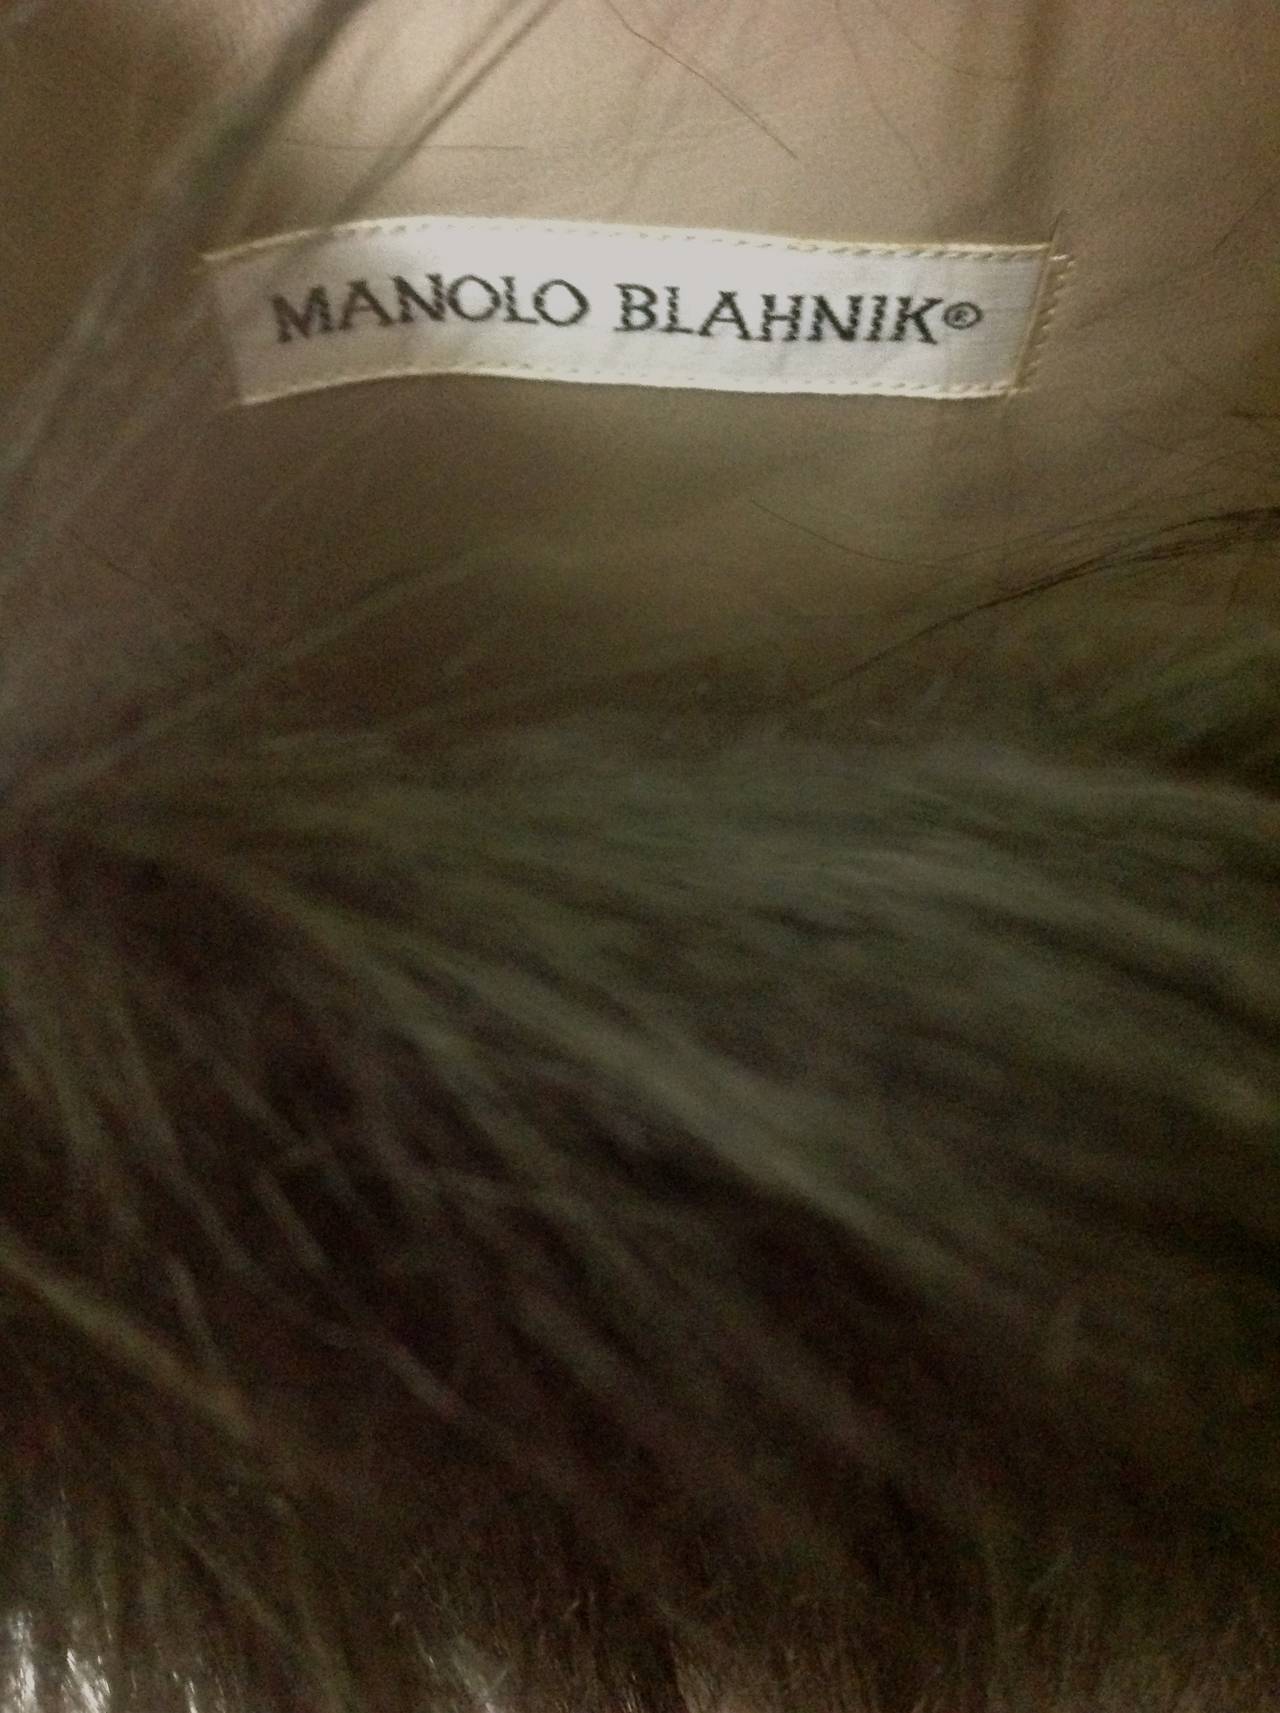 MANOLO BLAHNIK jet black fur boot          Size 39 1/2 1